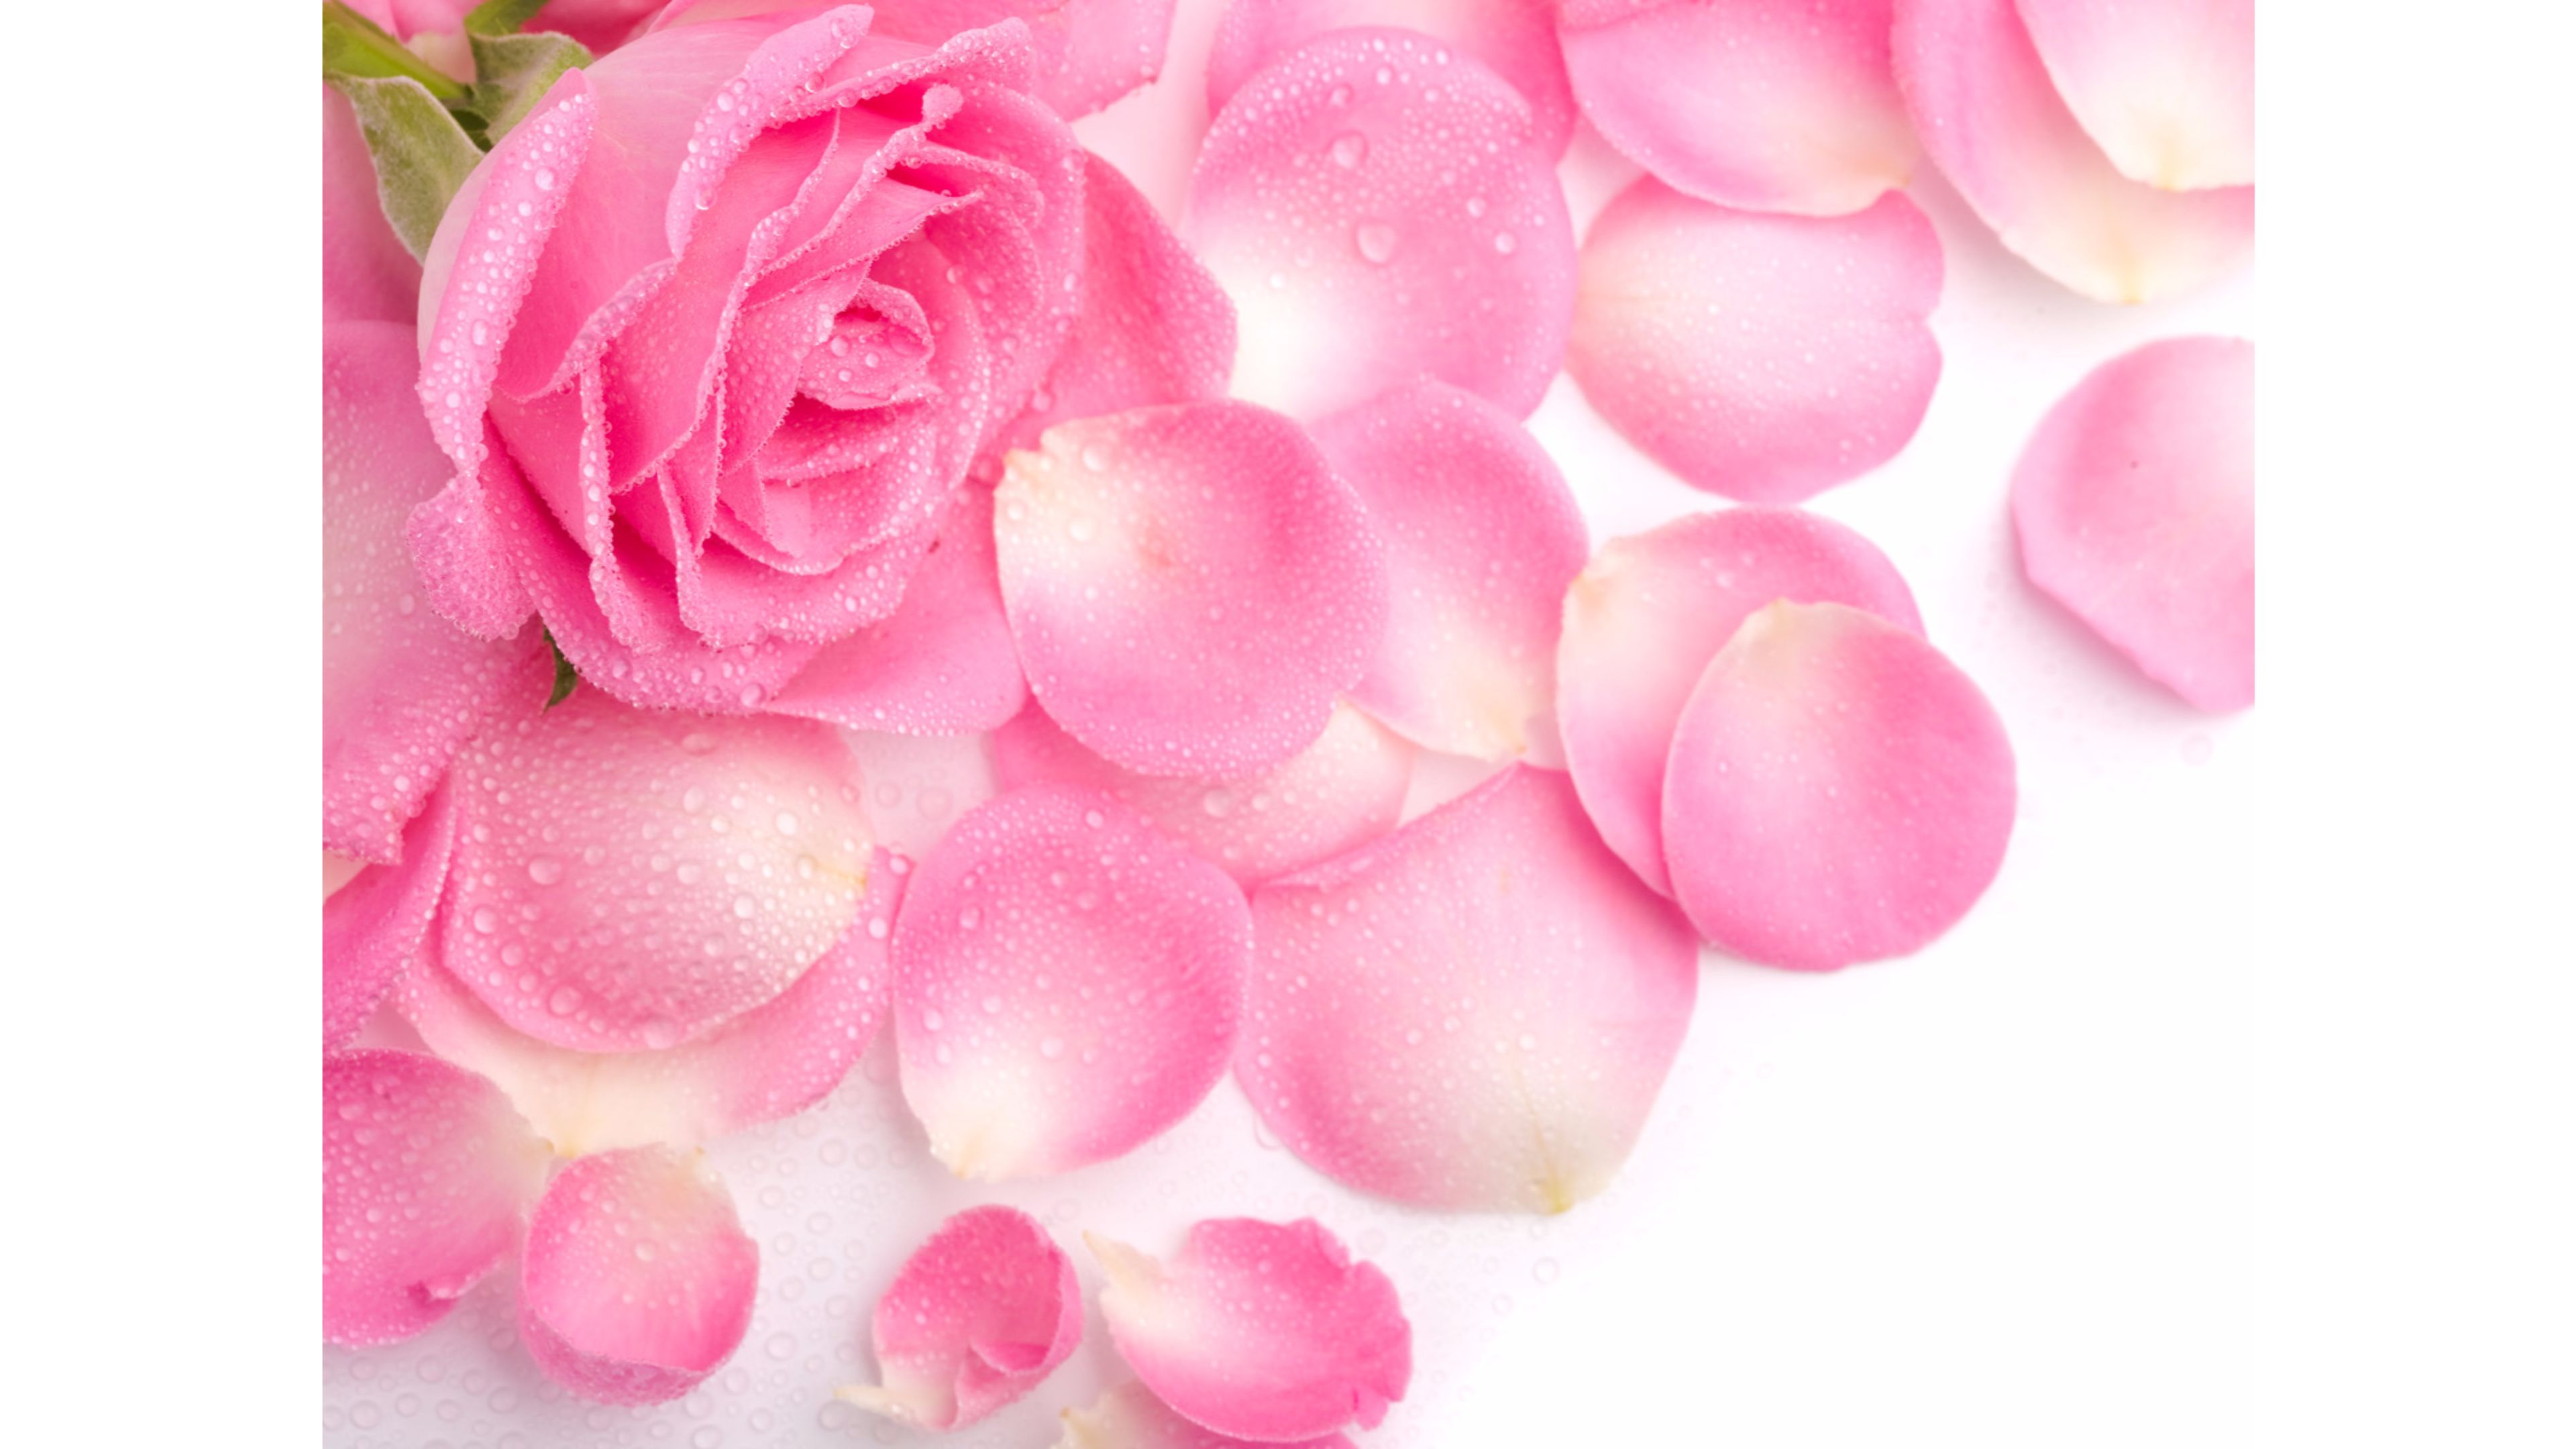 Amazing Pink Petals and 2016 Roses 4K Wallpapers | Free 4K Wallpaper